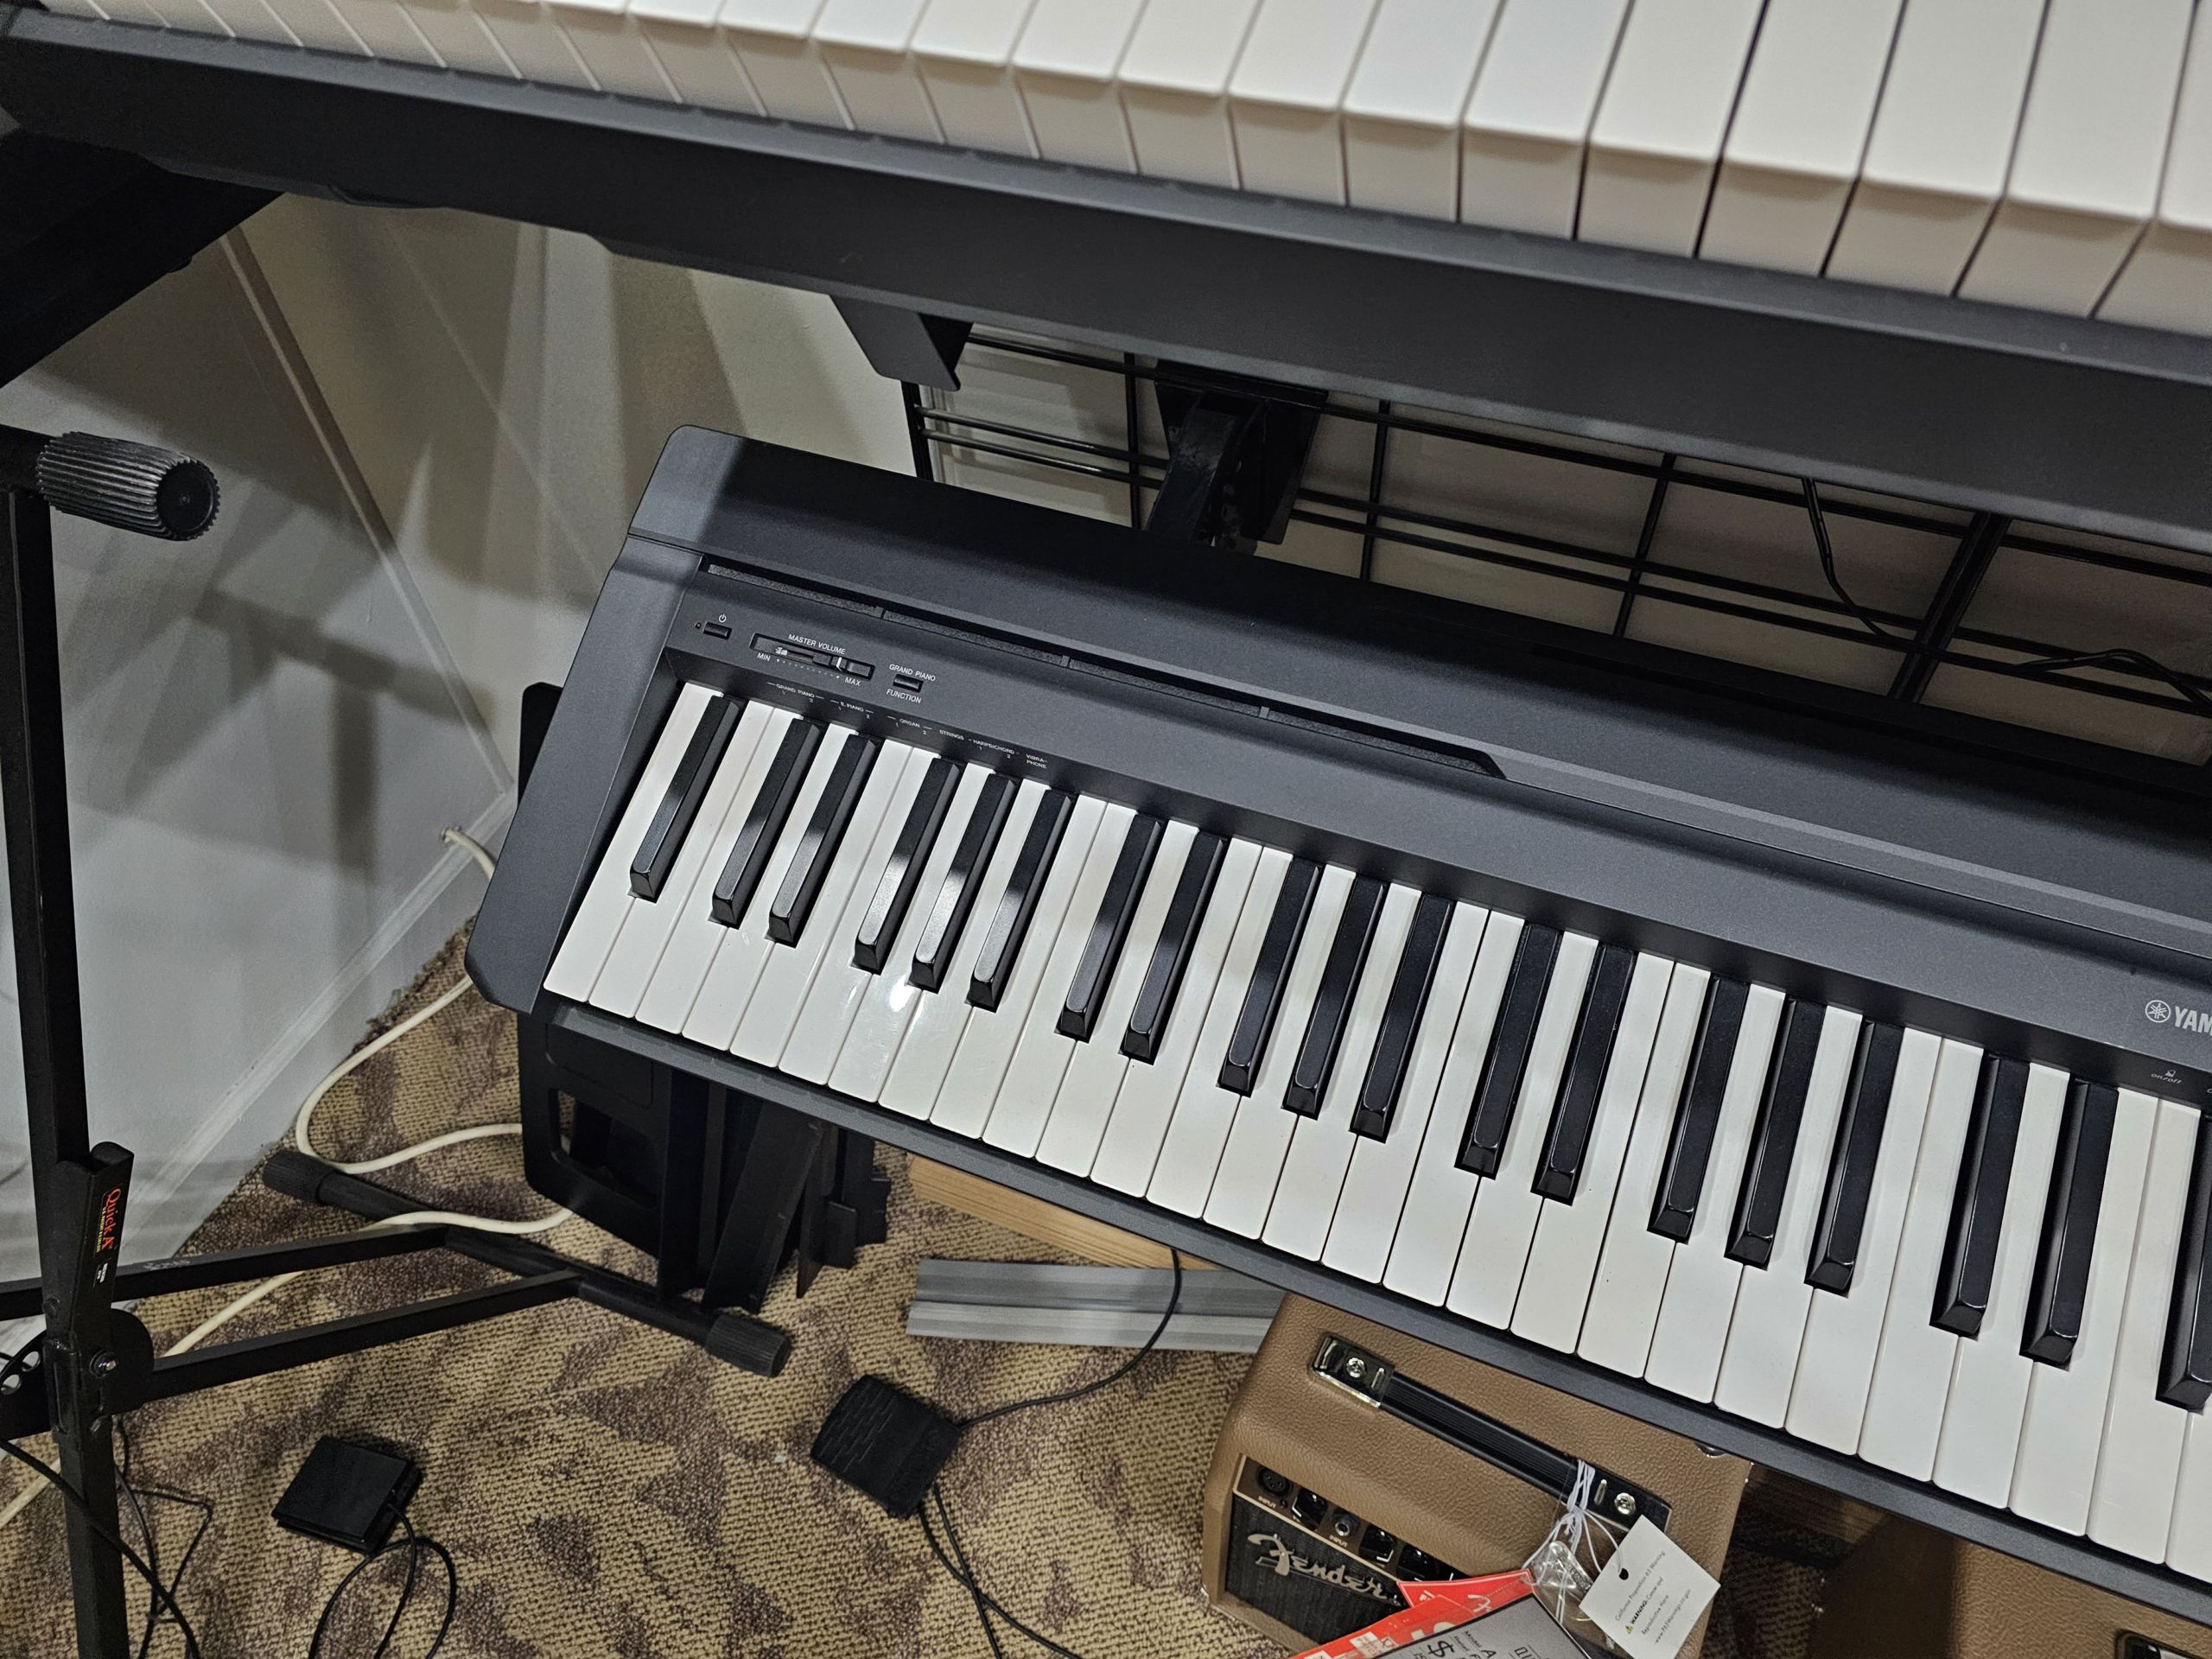 Yamaha P-45 Digital Piano